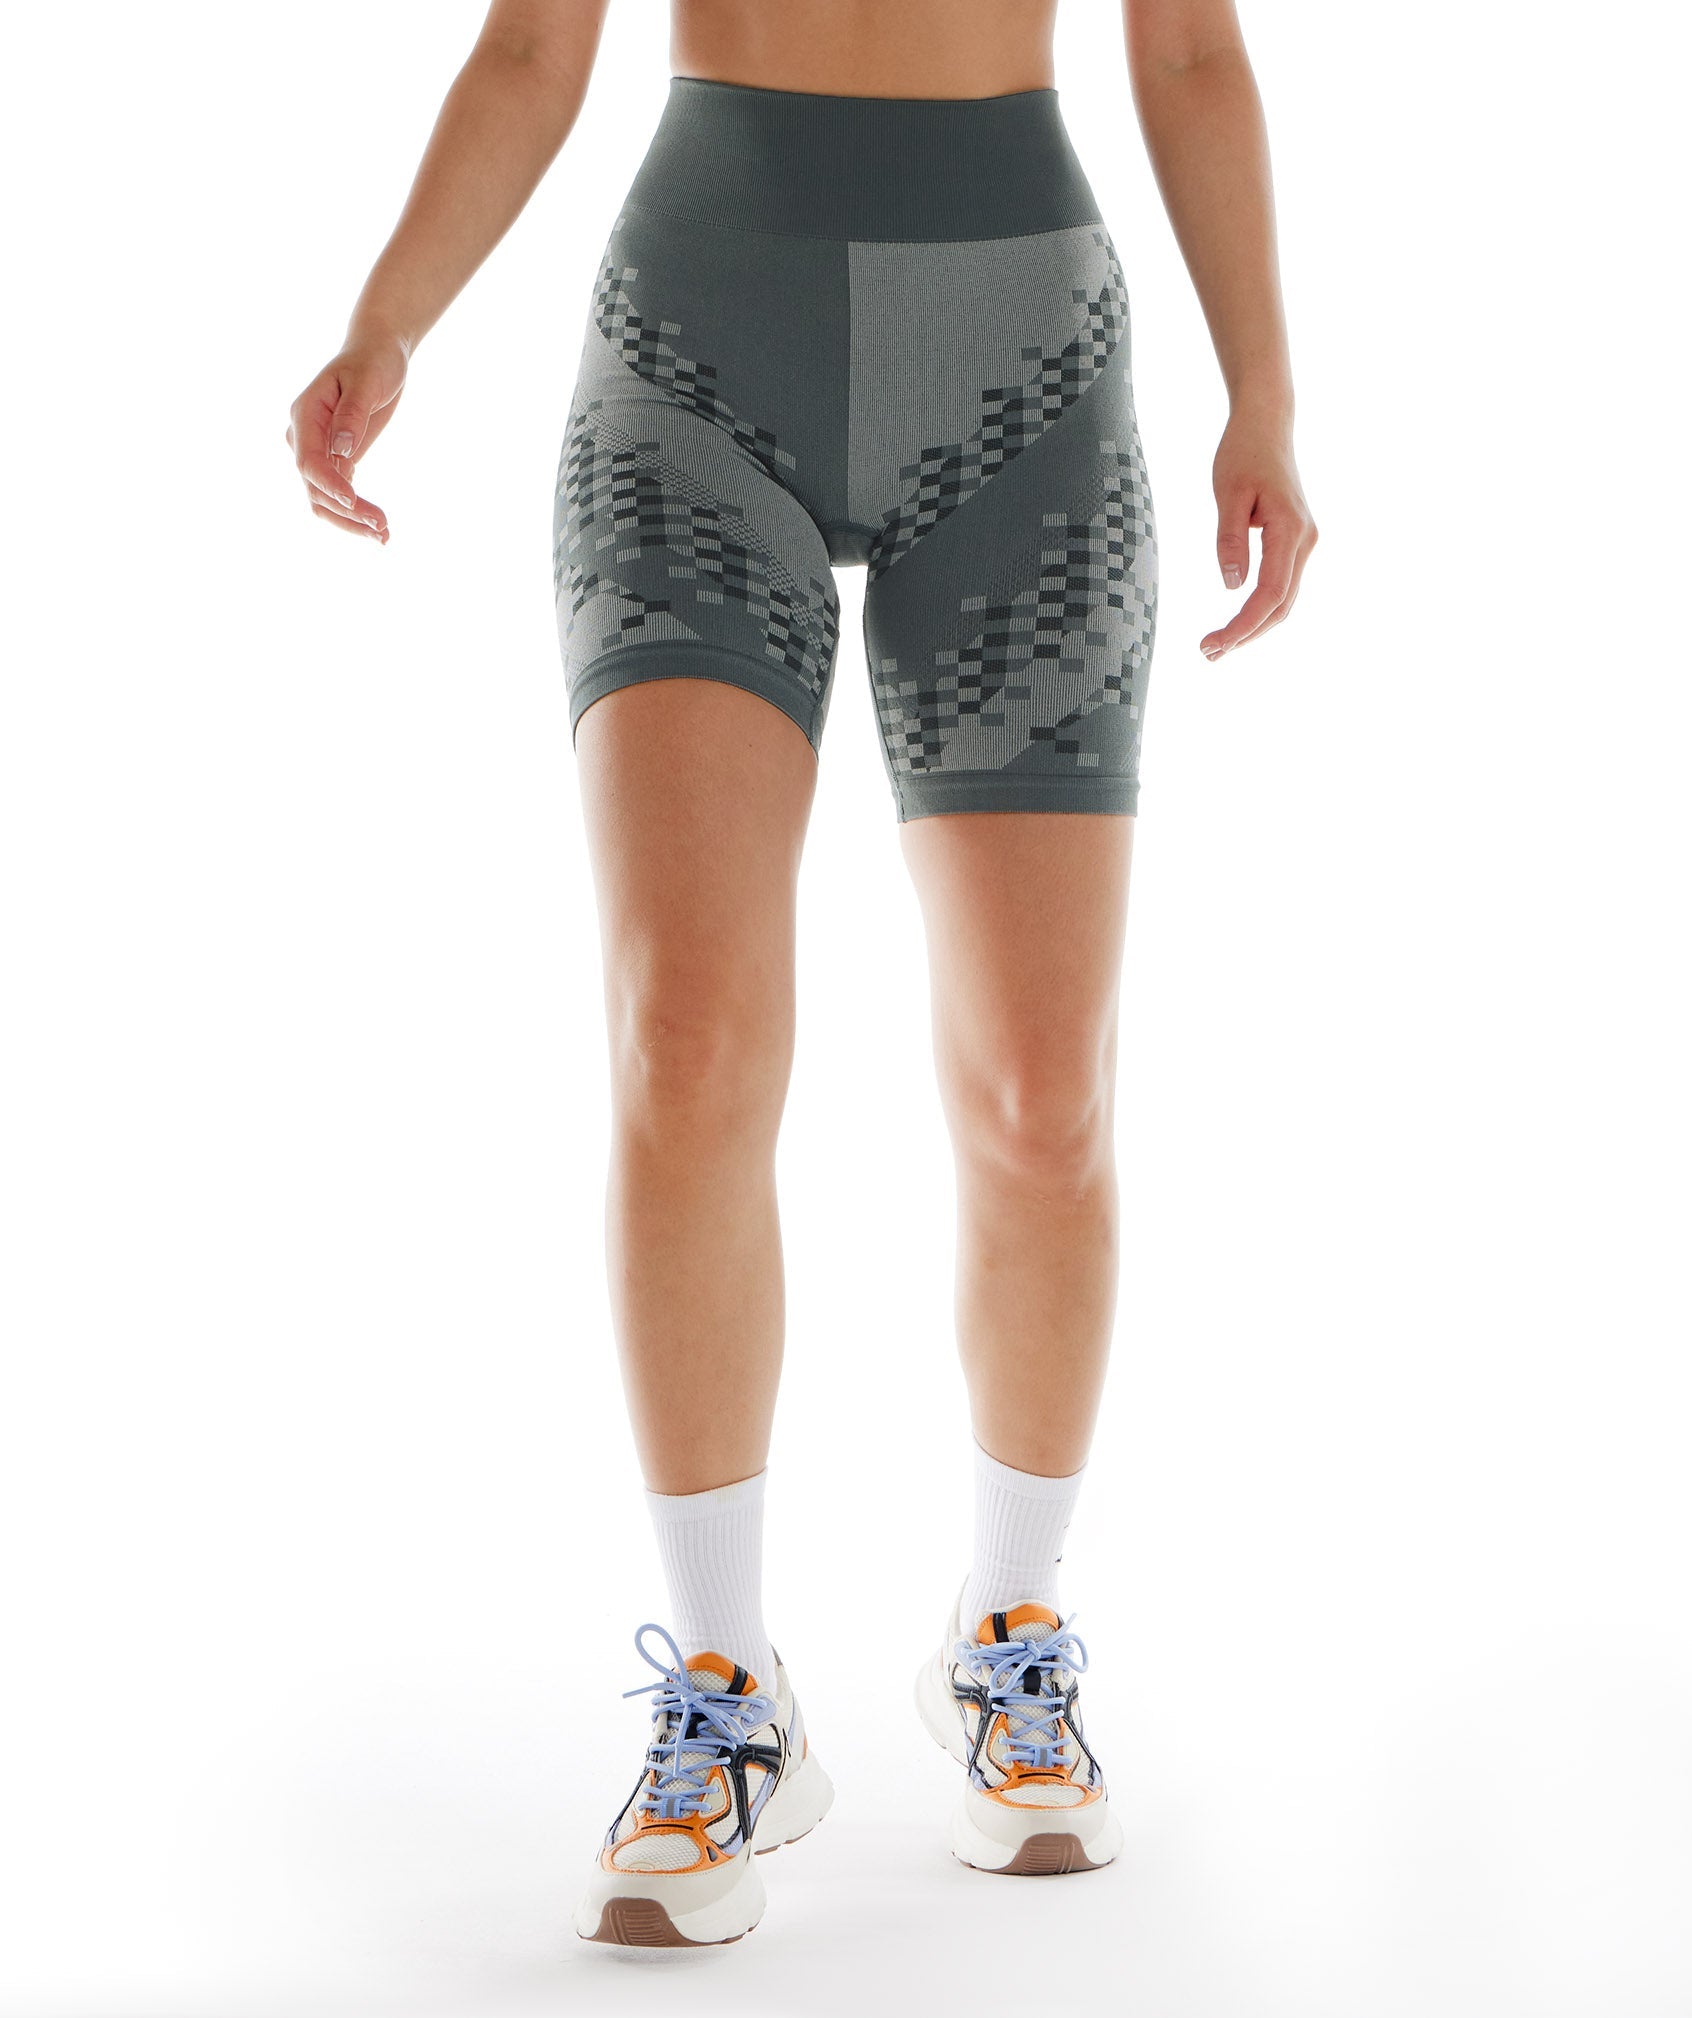 Wtflex Cyborg Seamless Cycling Shorts in Charcoal Grey/Black/Light Grey